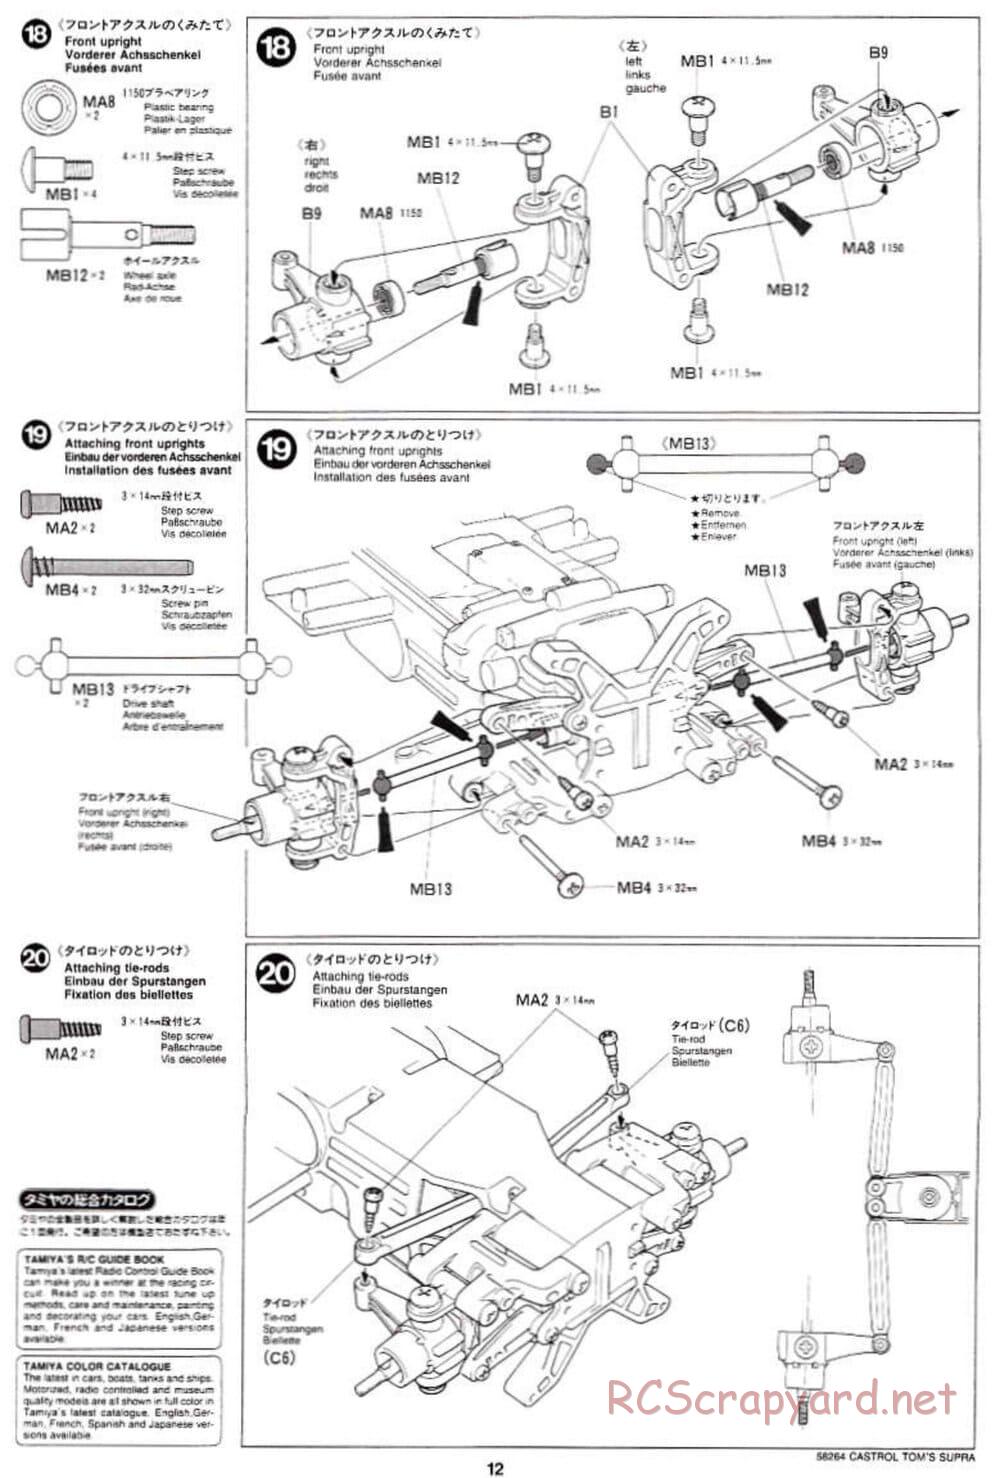 Tamiya - Castrol Tom's Supra 2000 - TL-01 Chassis - Manual - Page 12